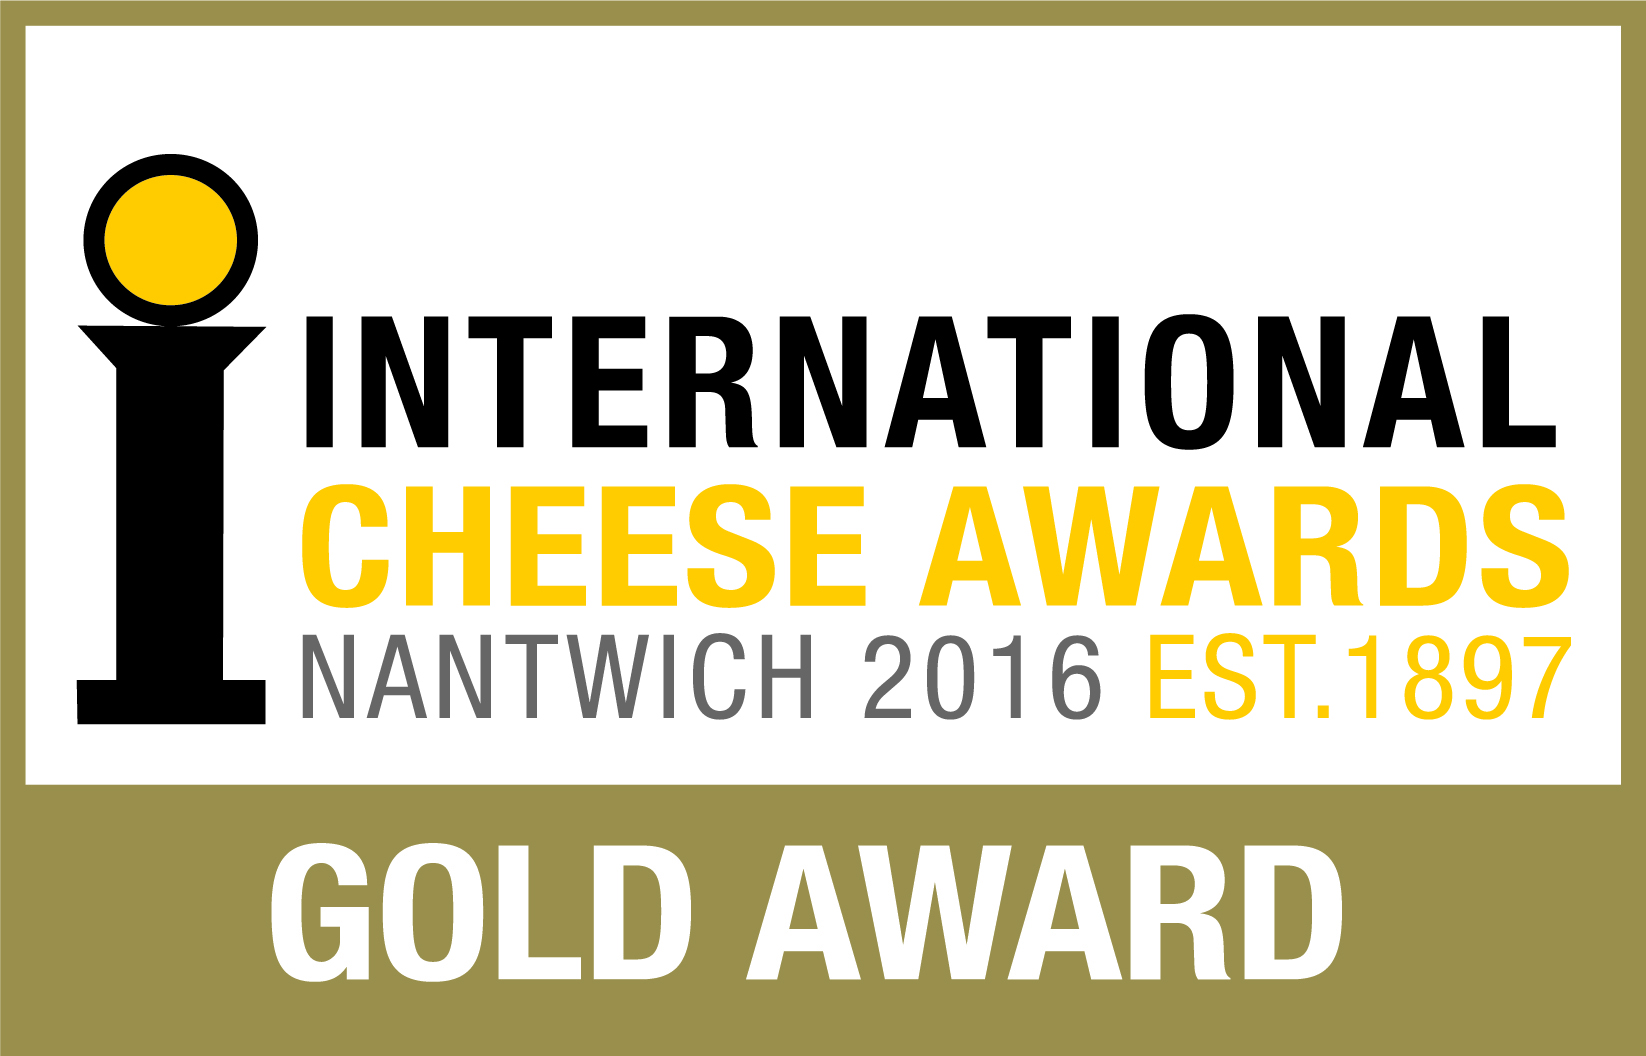 Nantwich Gold Award 2016 (2).jpg